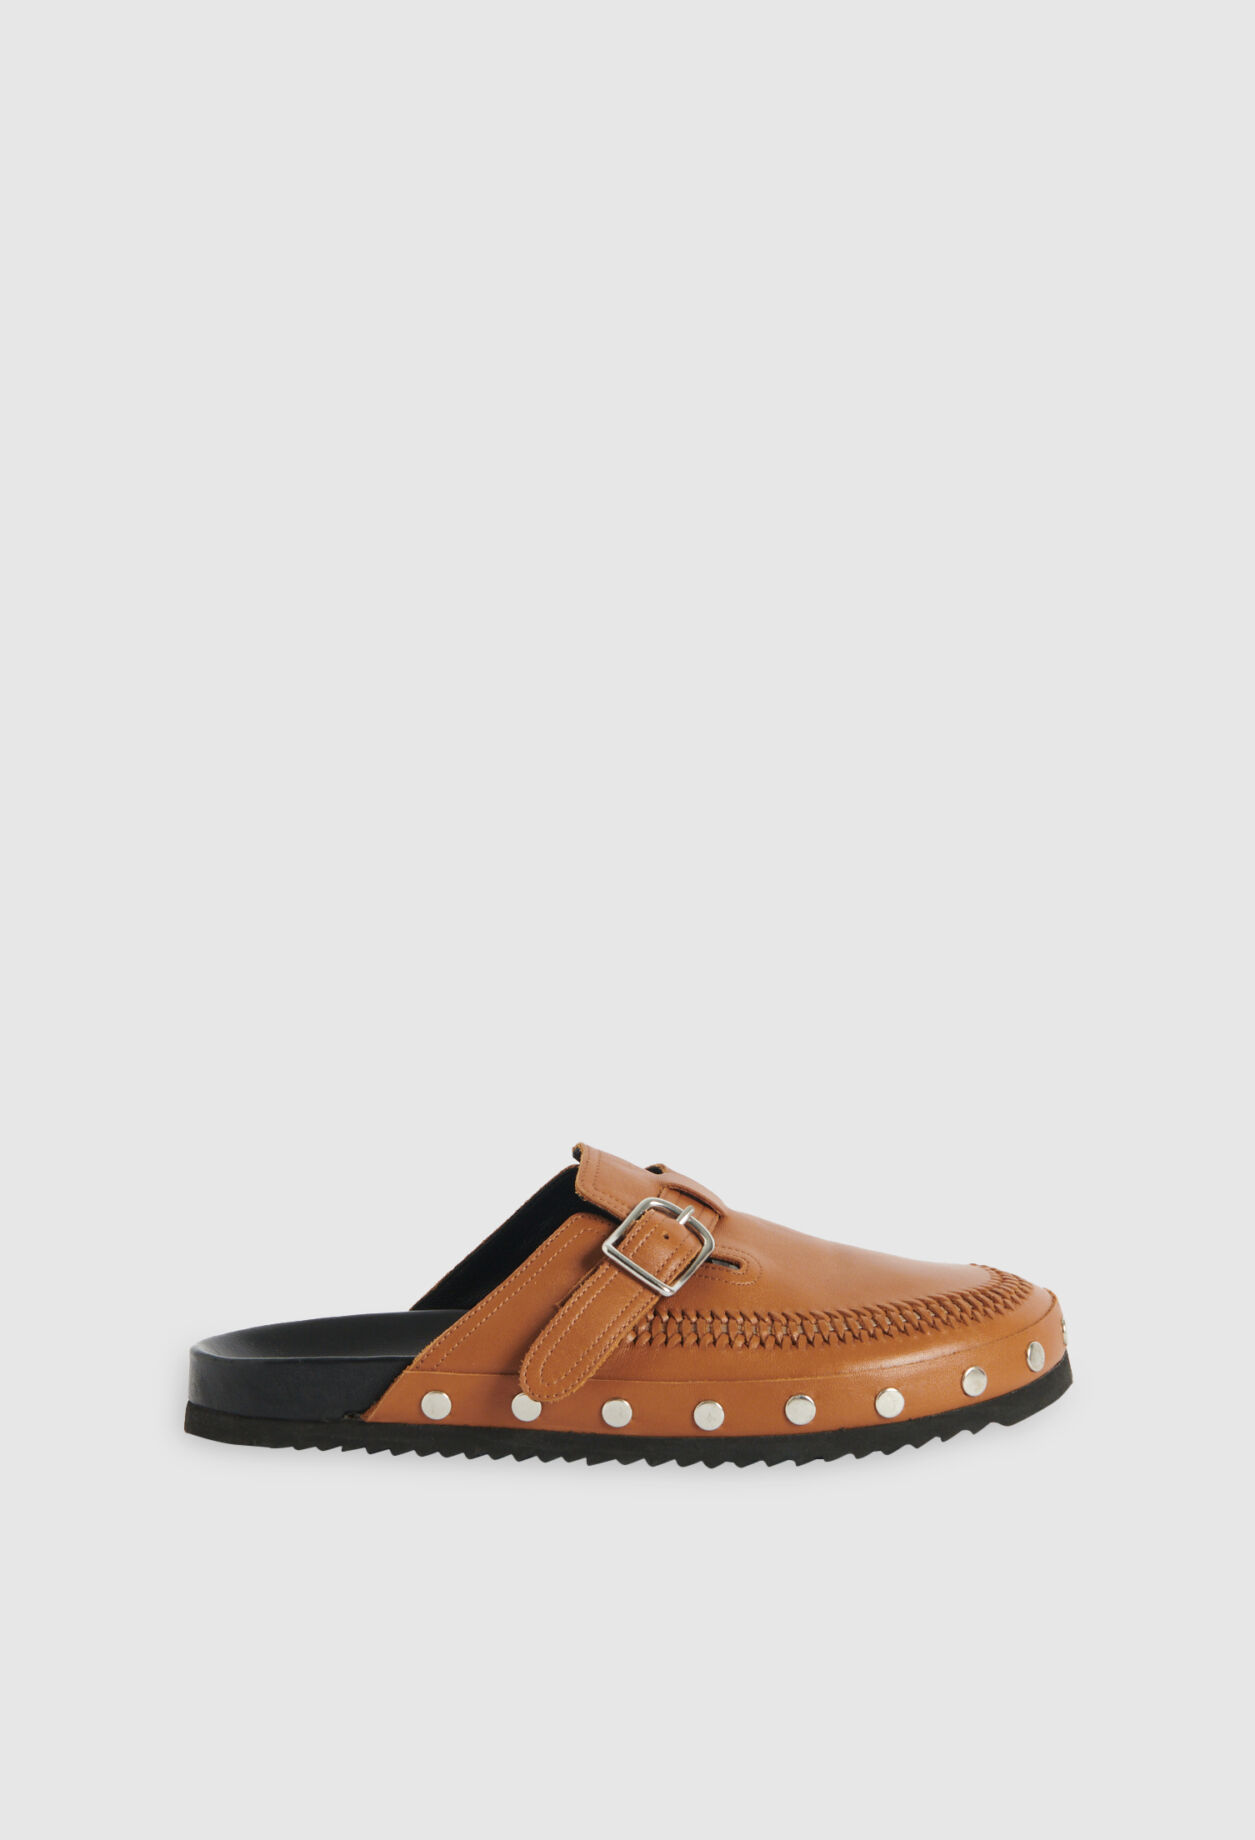 Caramel leather loafer clogs